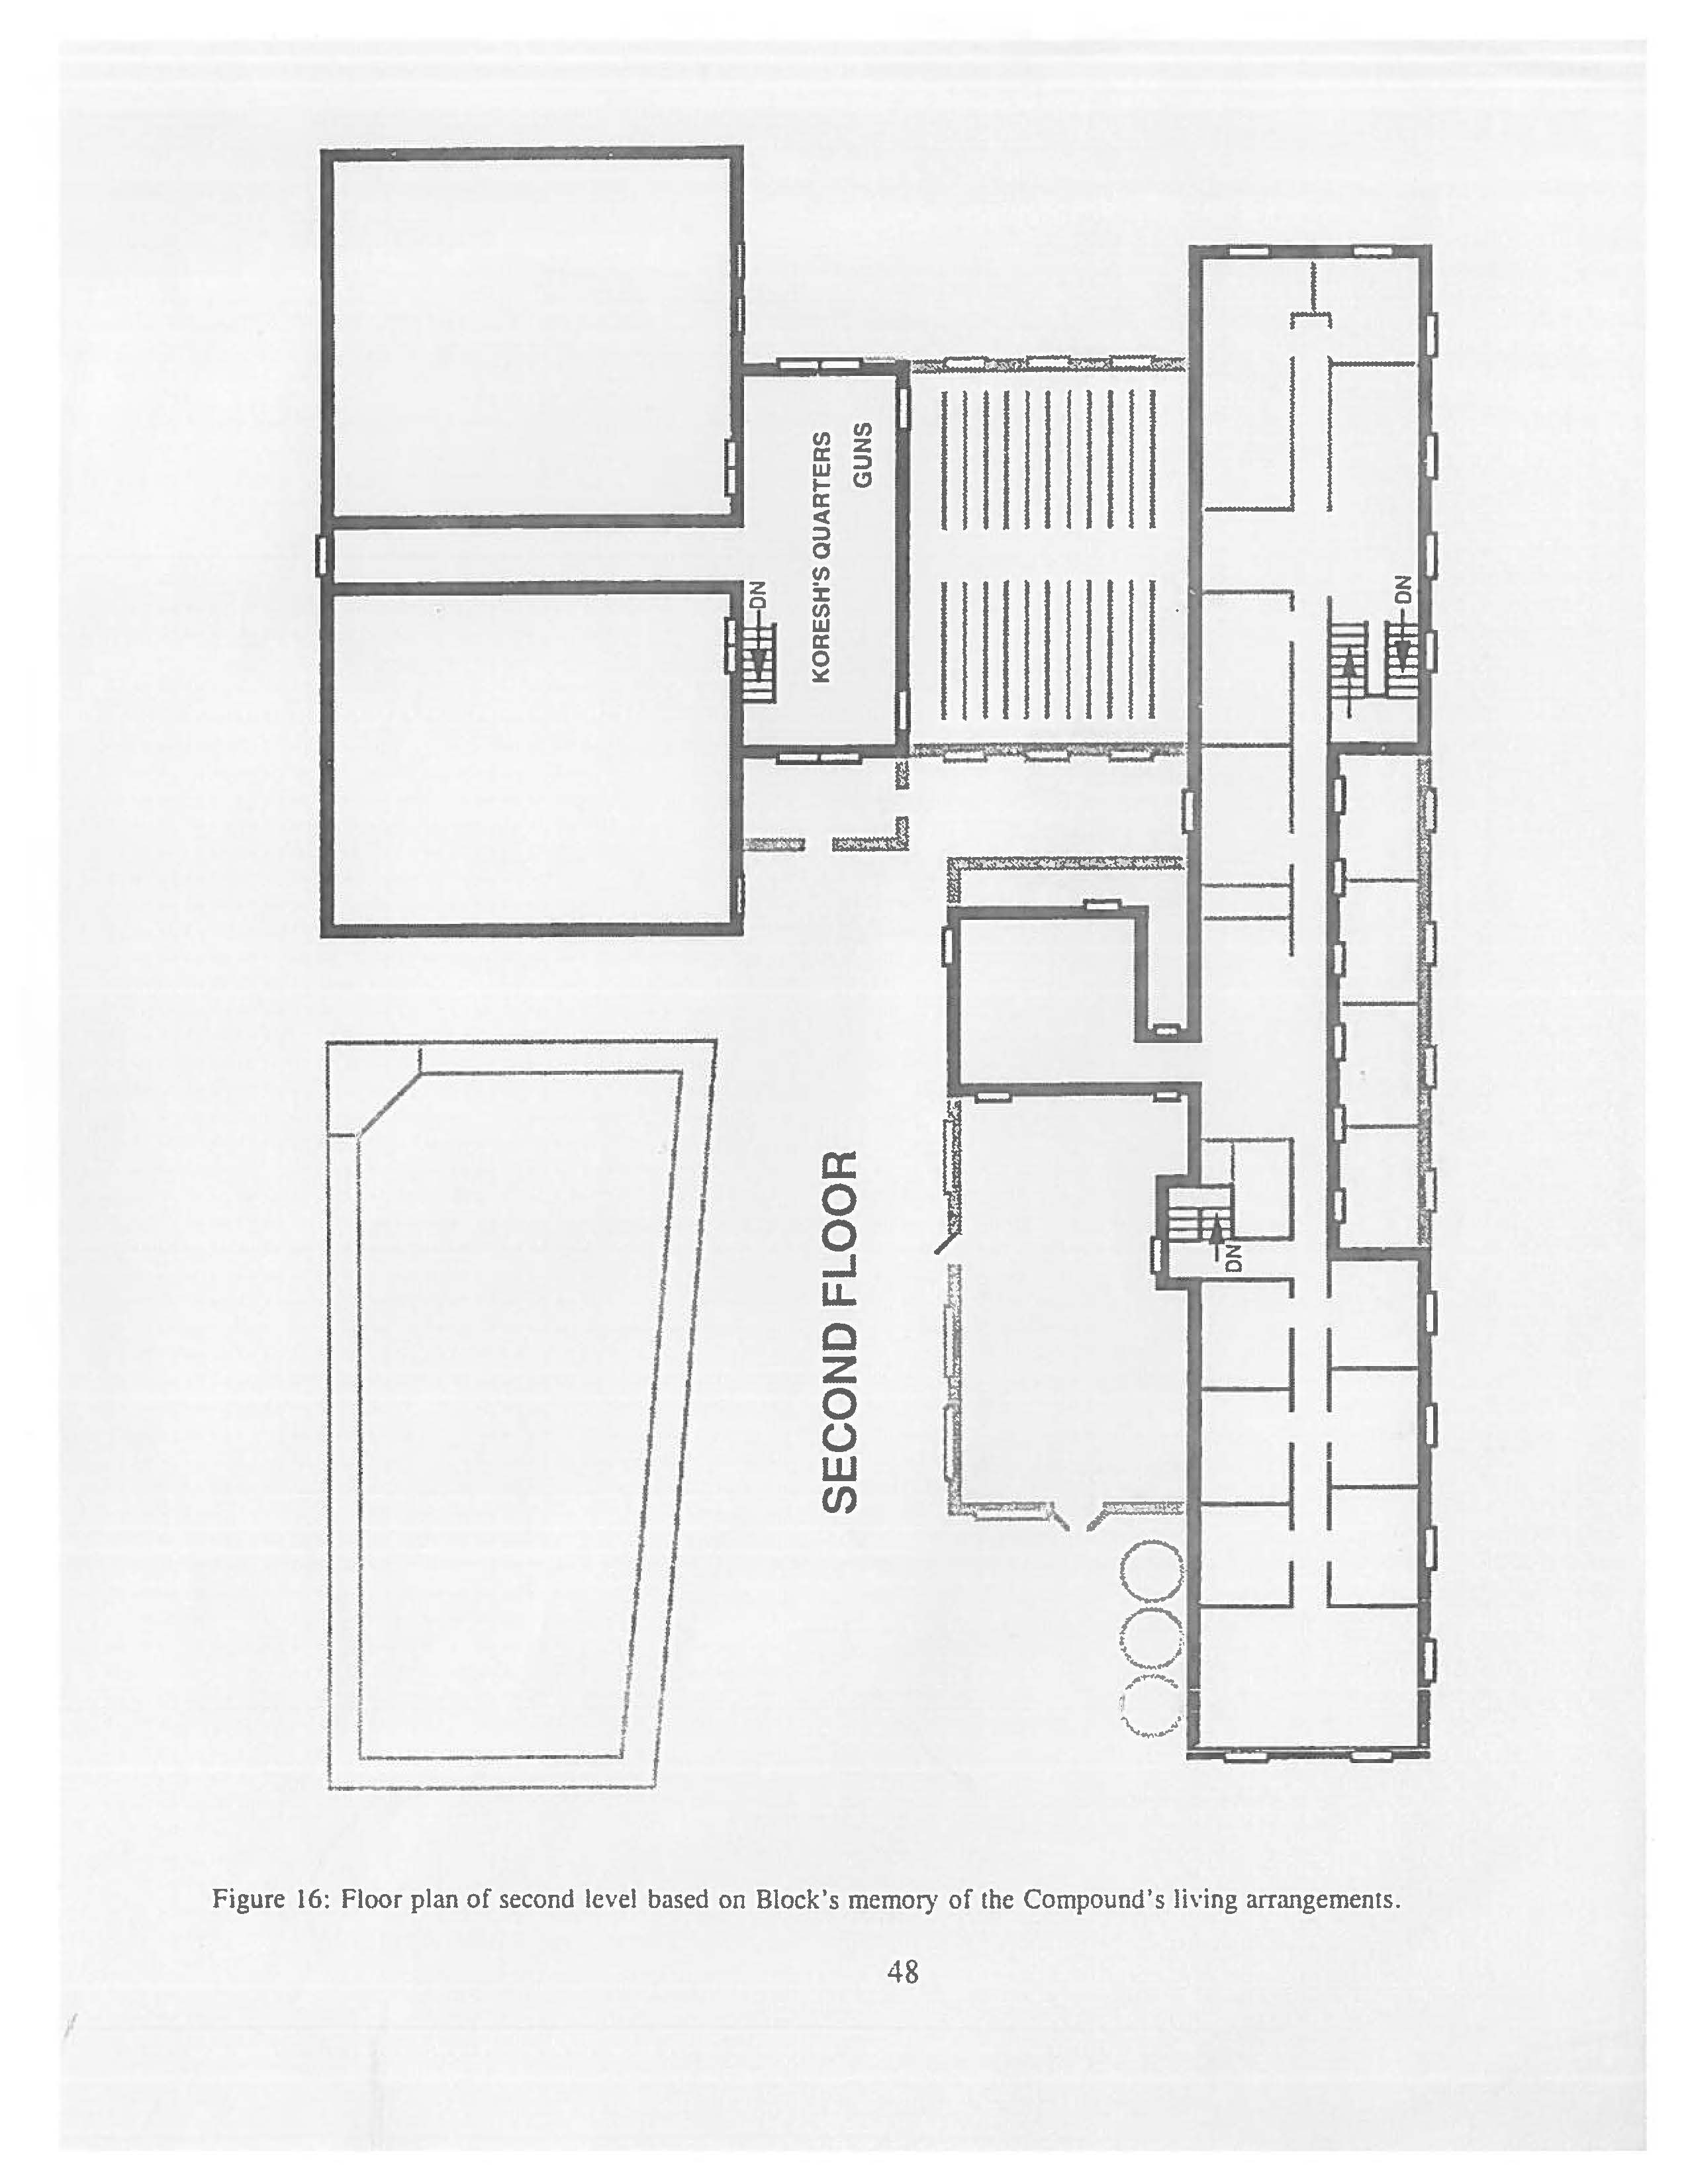 Mount Carmel floor plan of the second level.